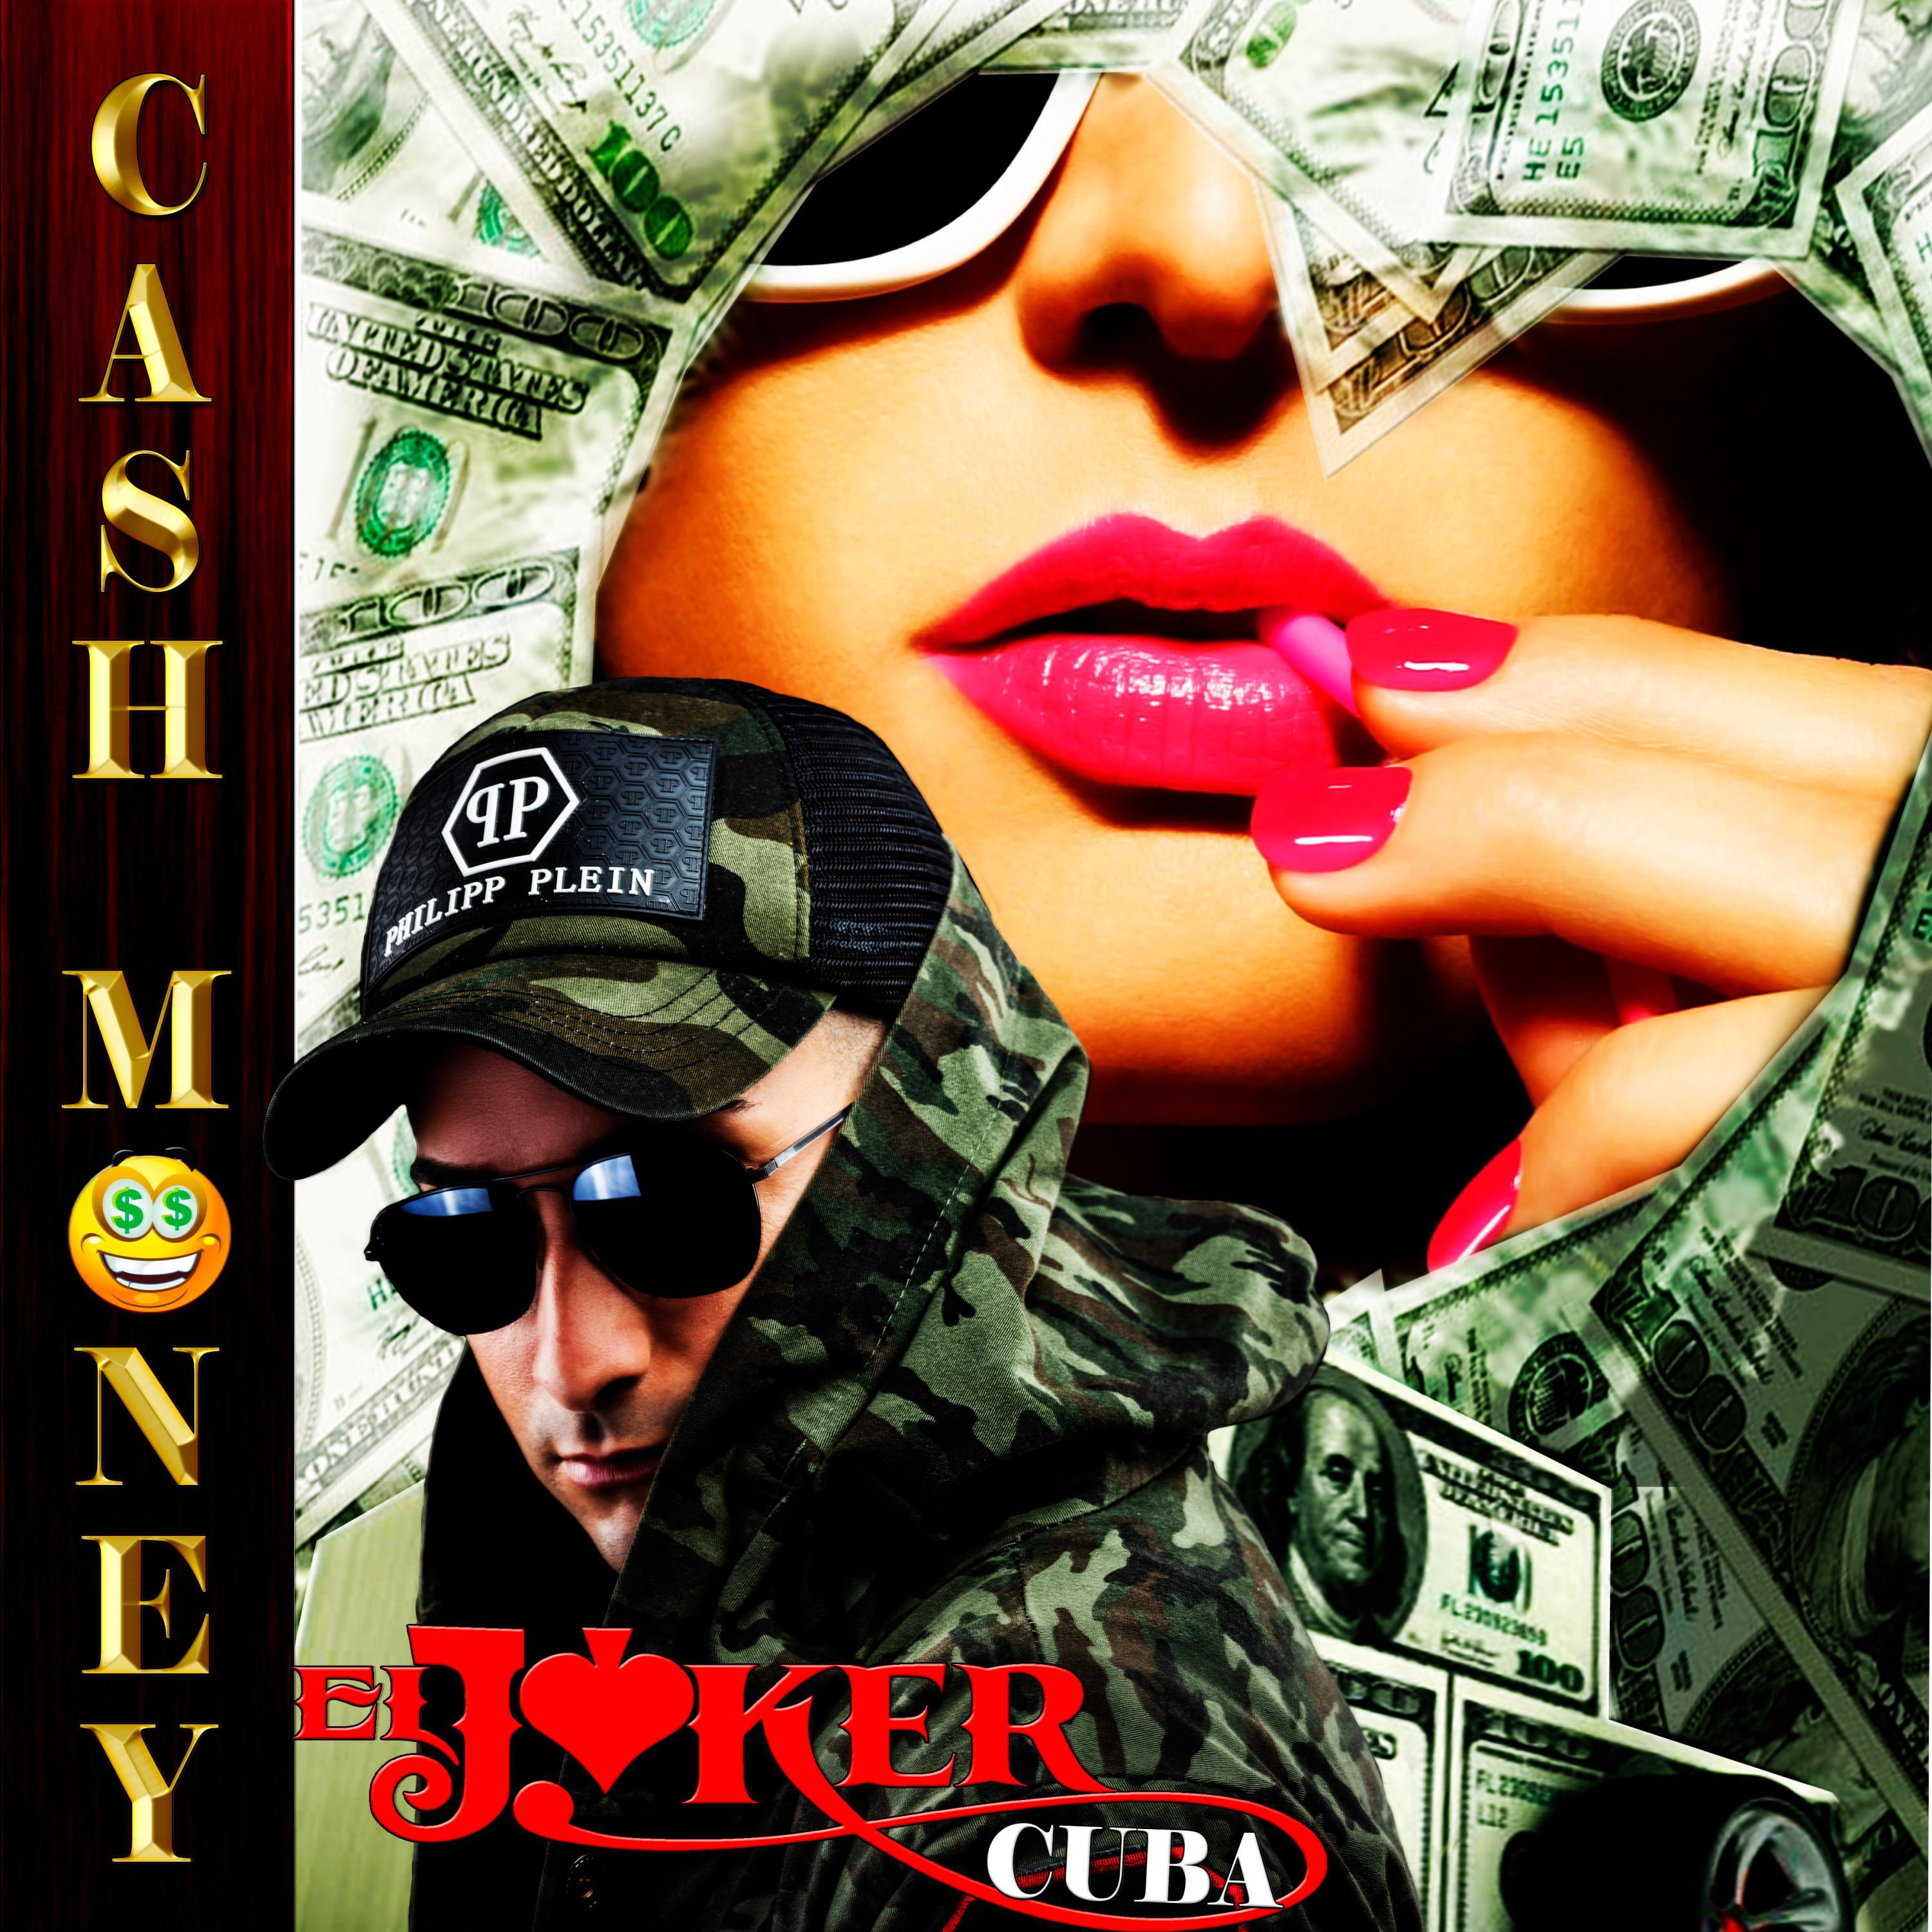 EL Joker Cuba - Cash Money